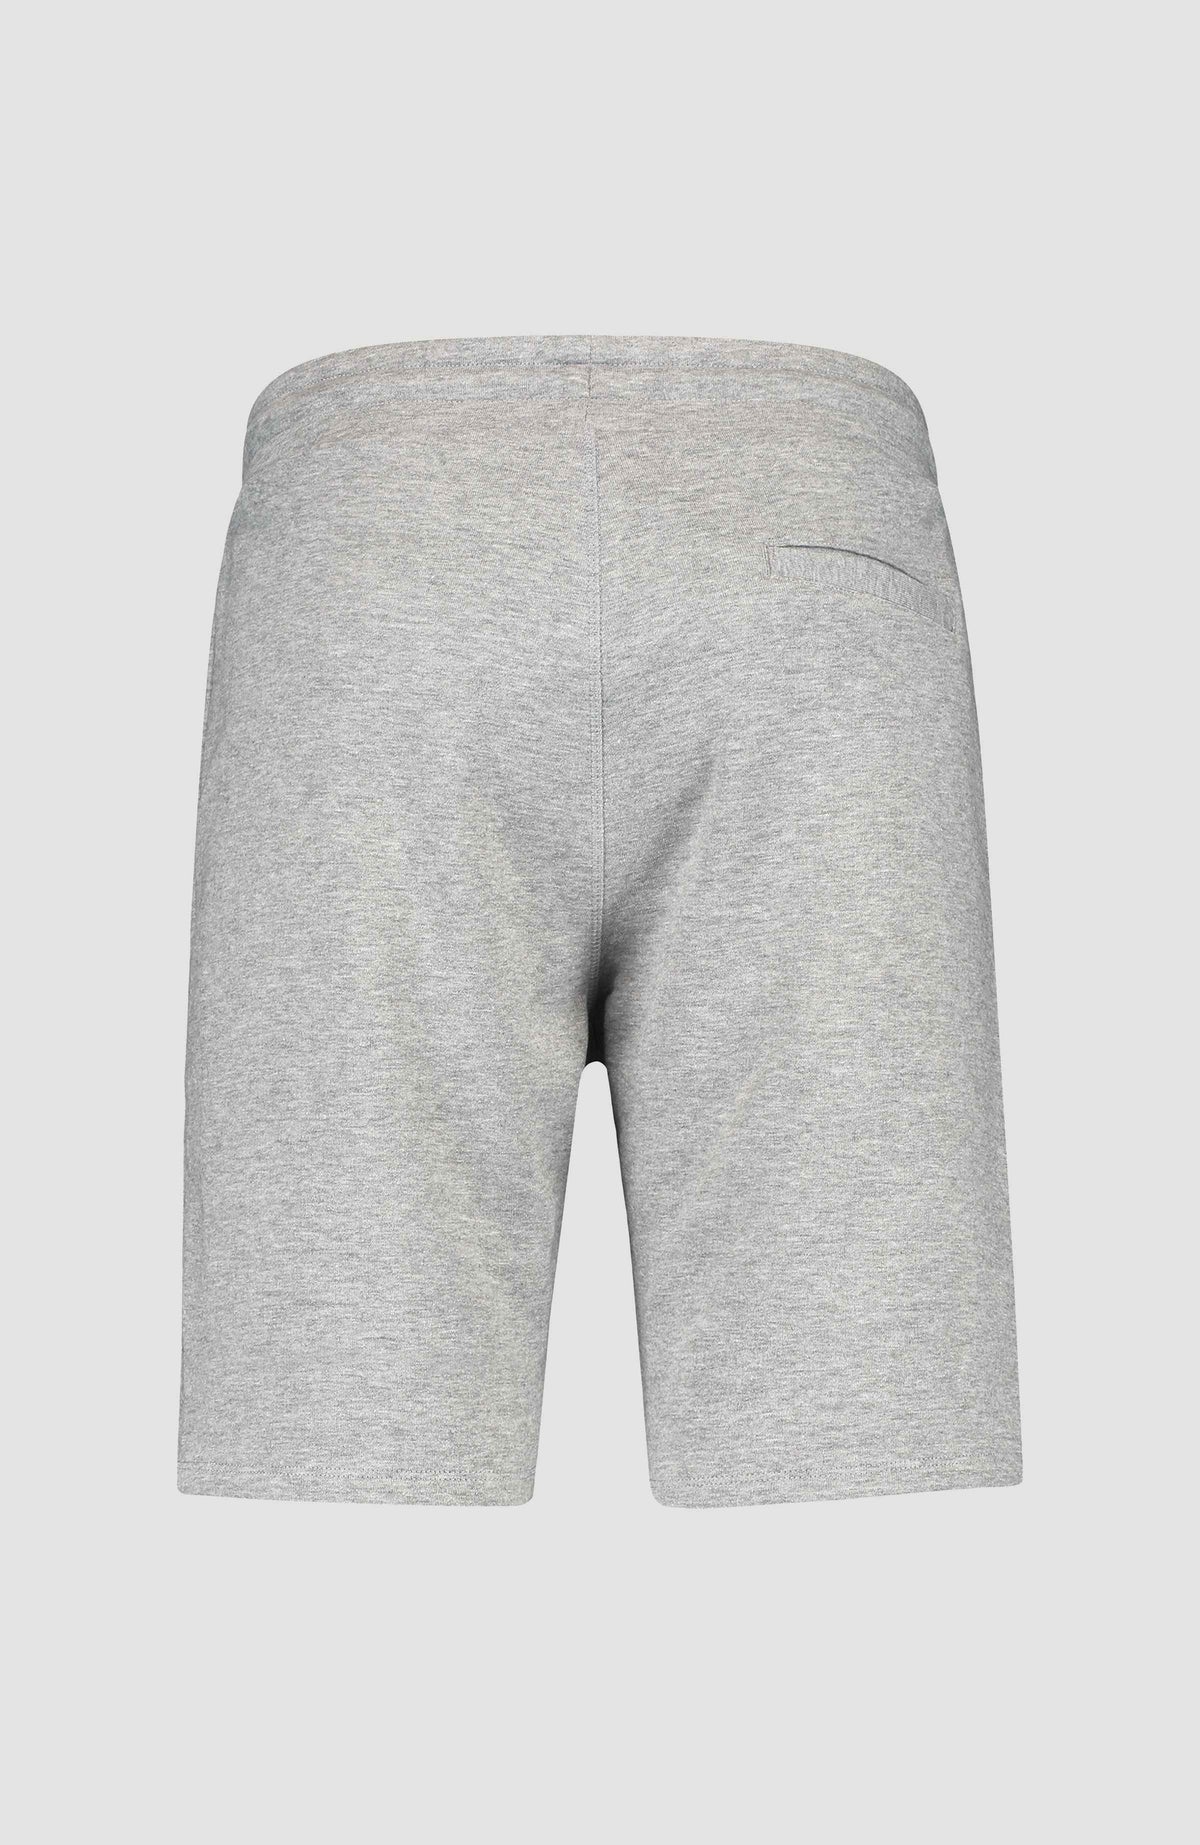 Men's Gym Shorts, Silver